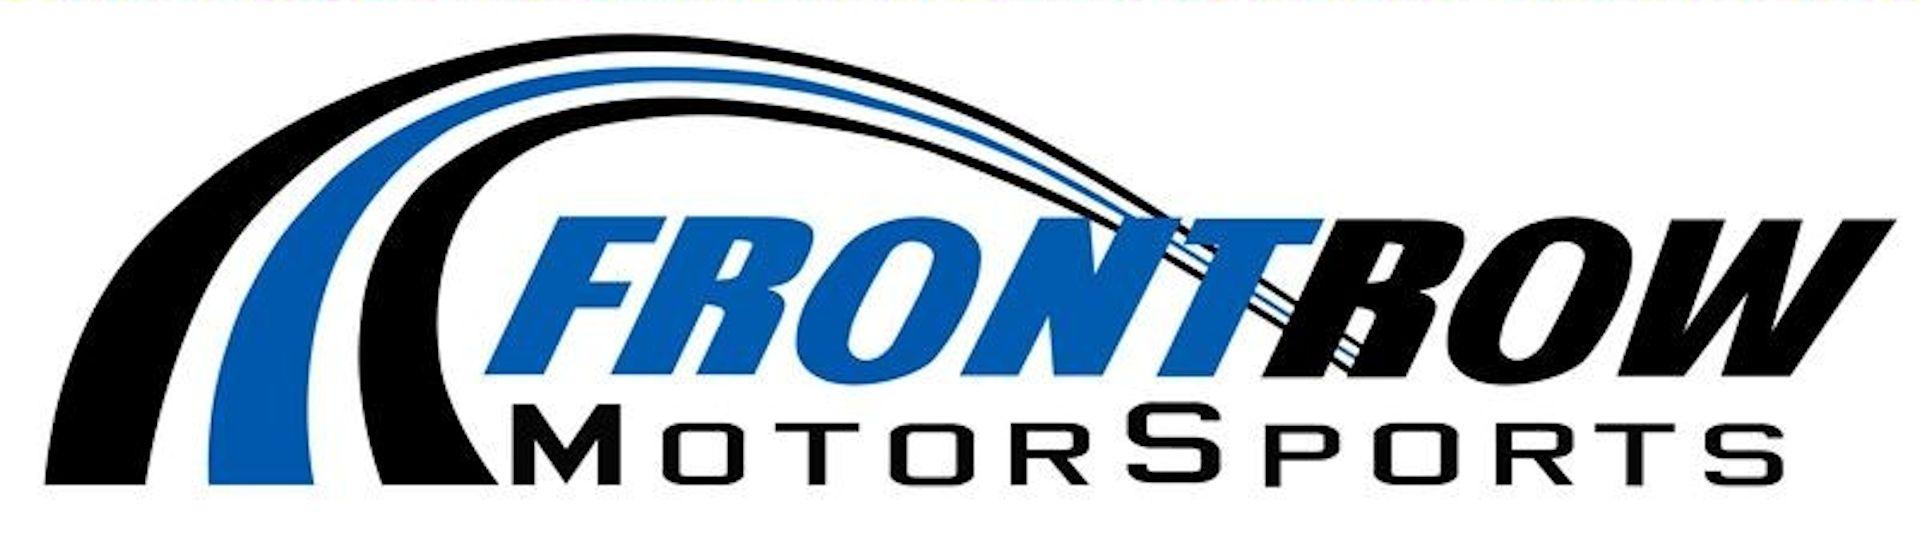 NASCAR Motorsports Logo - Front Row Motorsports acquires third NASCAR Charter